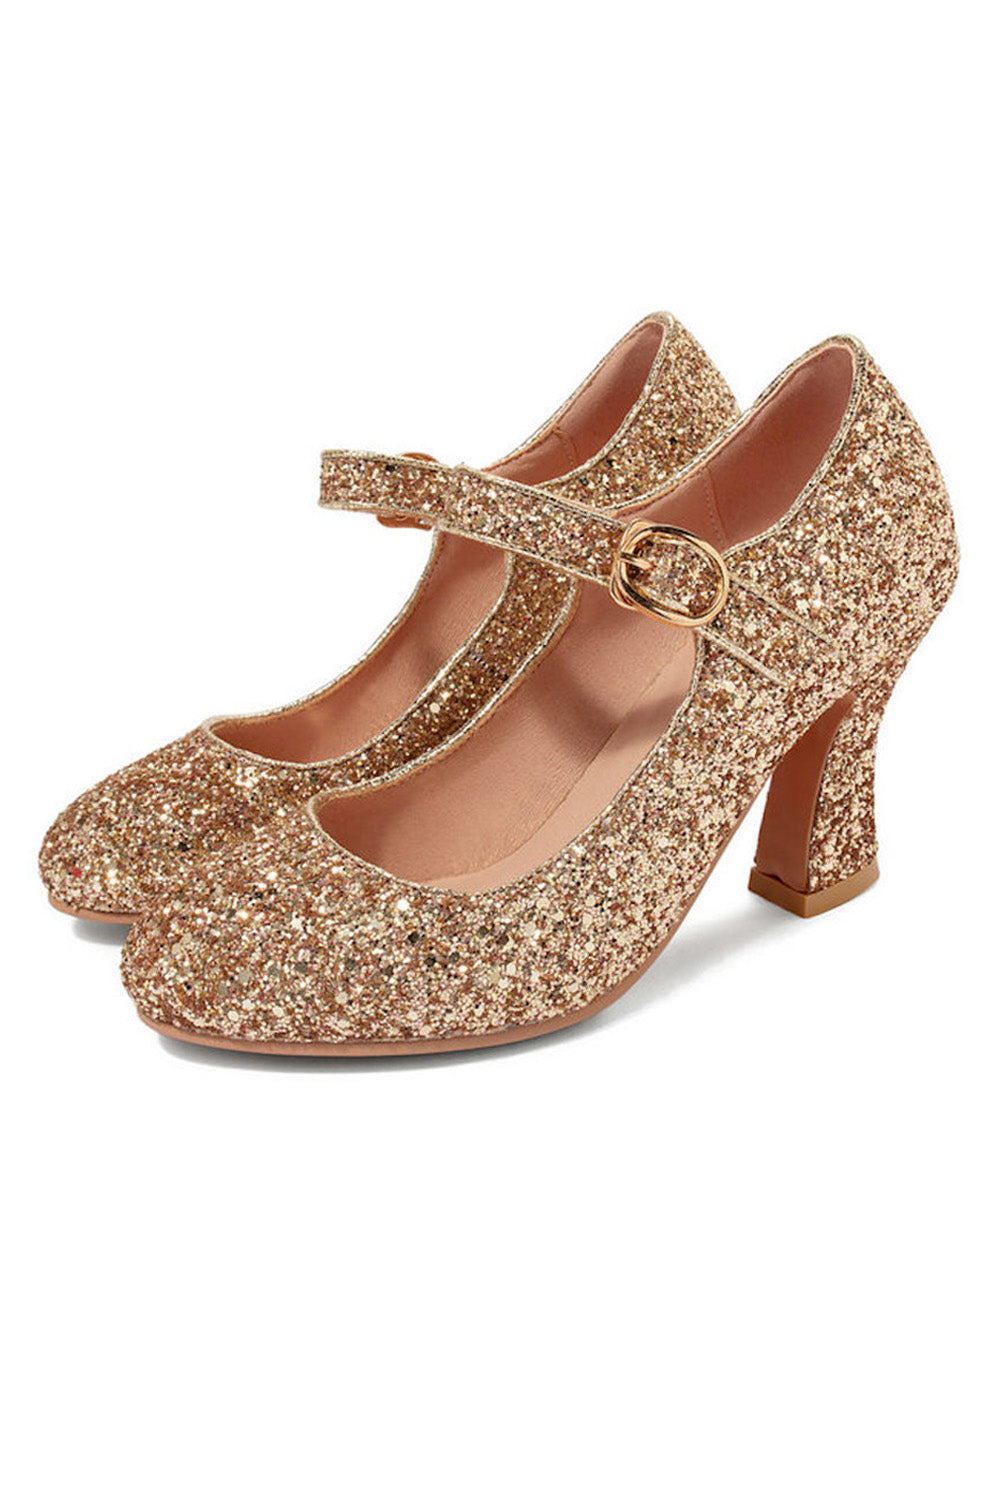 Glitter Mary Jane heels in gold